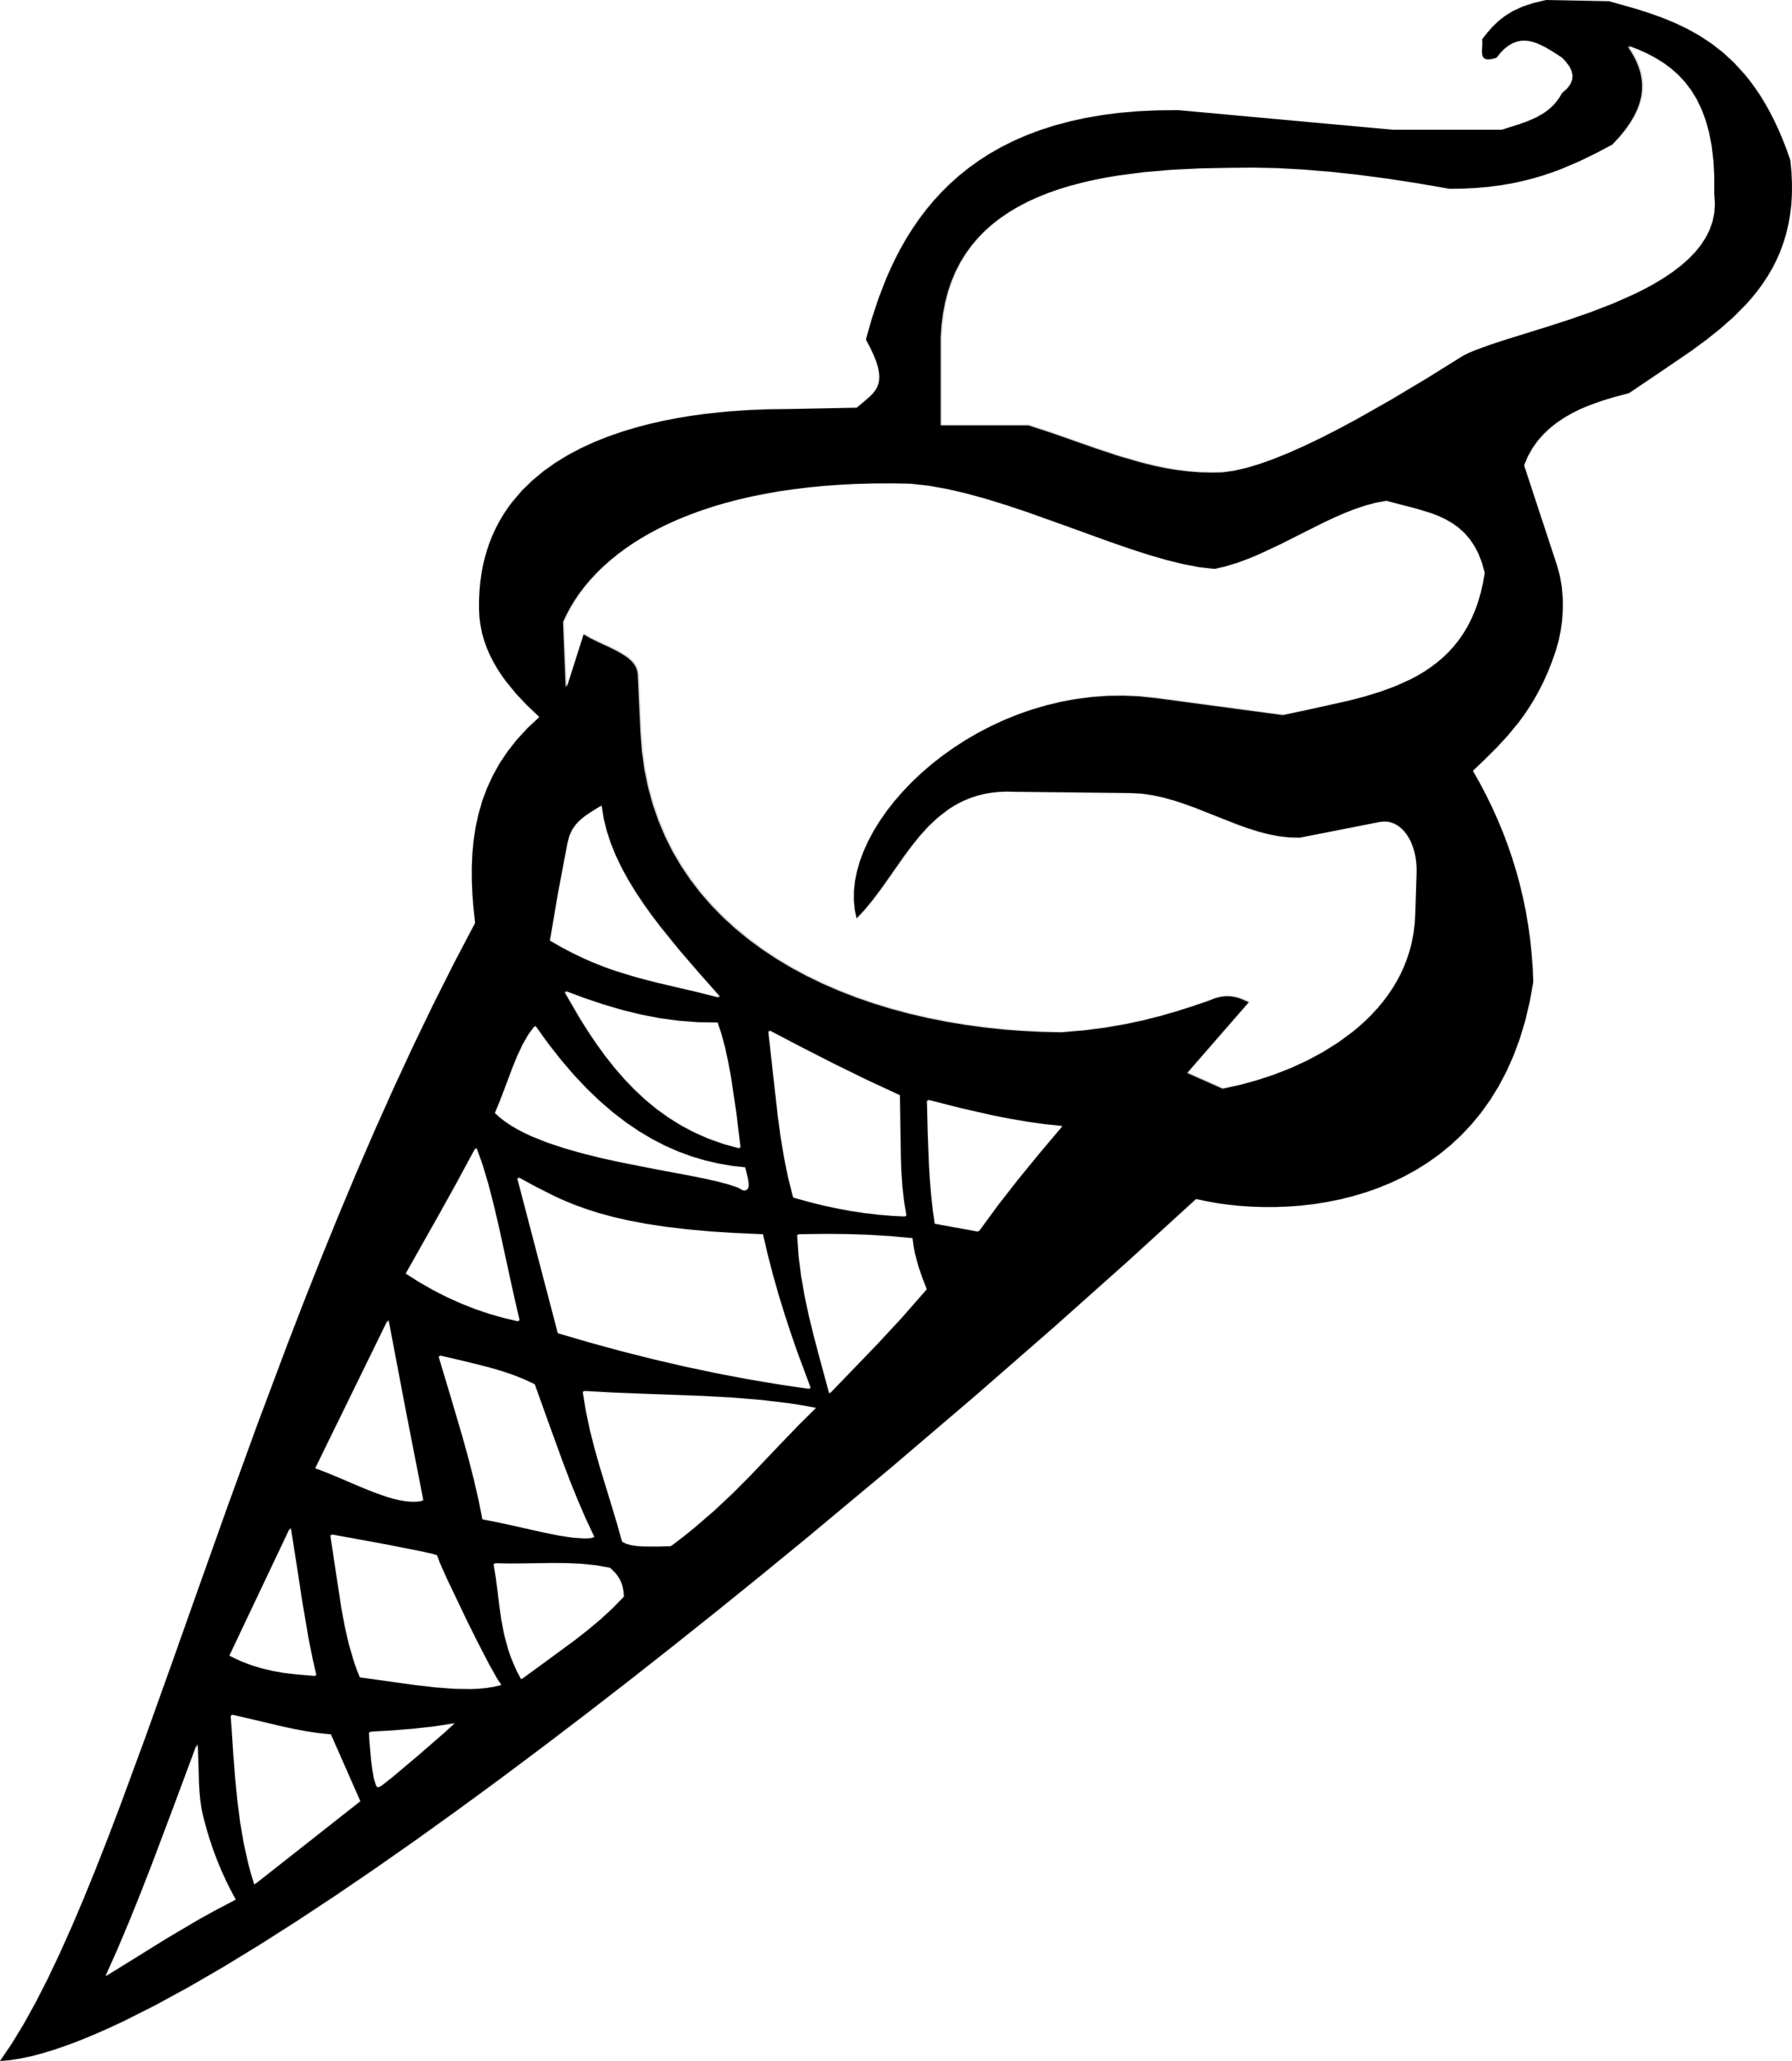 Icecream Cone PNG Black And White - Ice Cream Cones